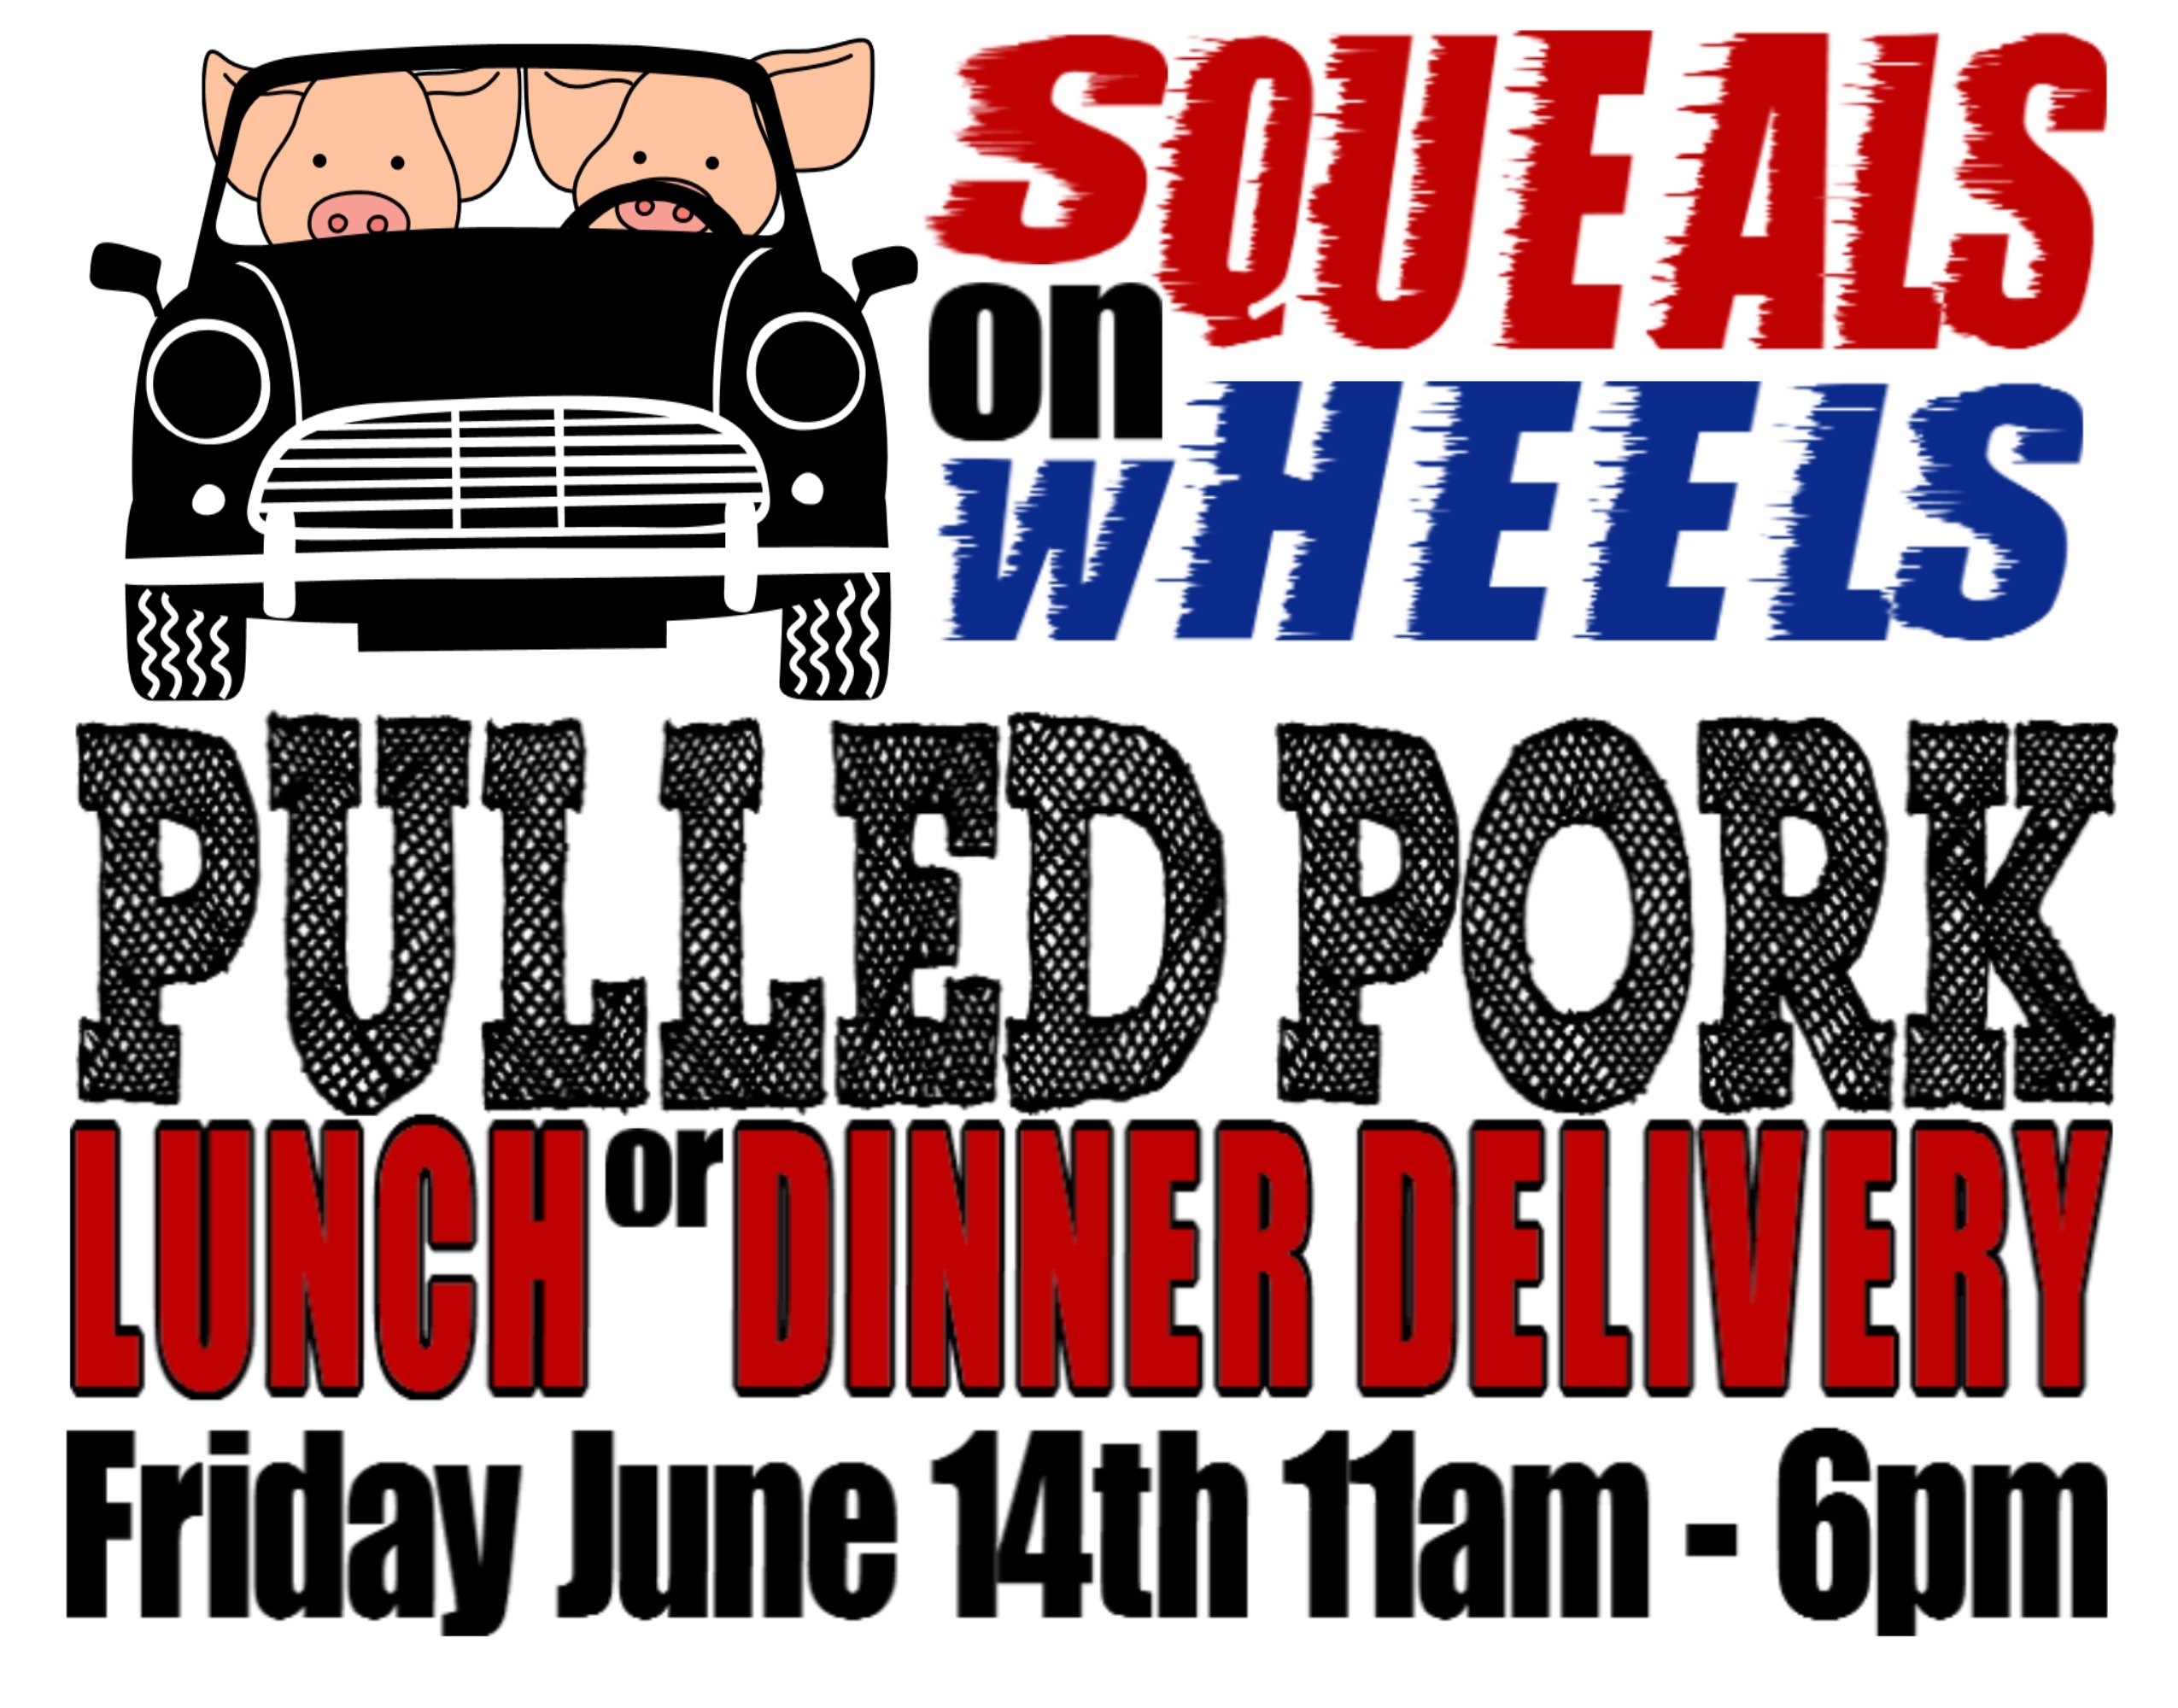 Squeels on Wheels 2013 Banner